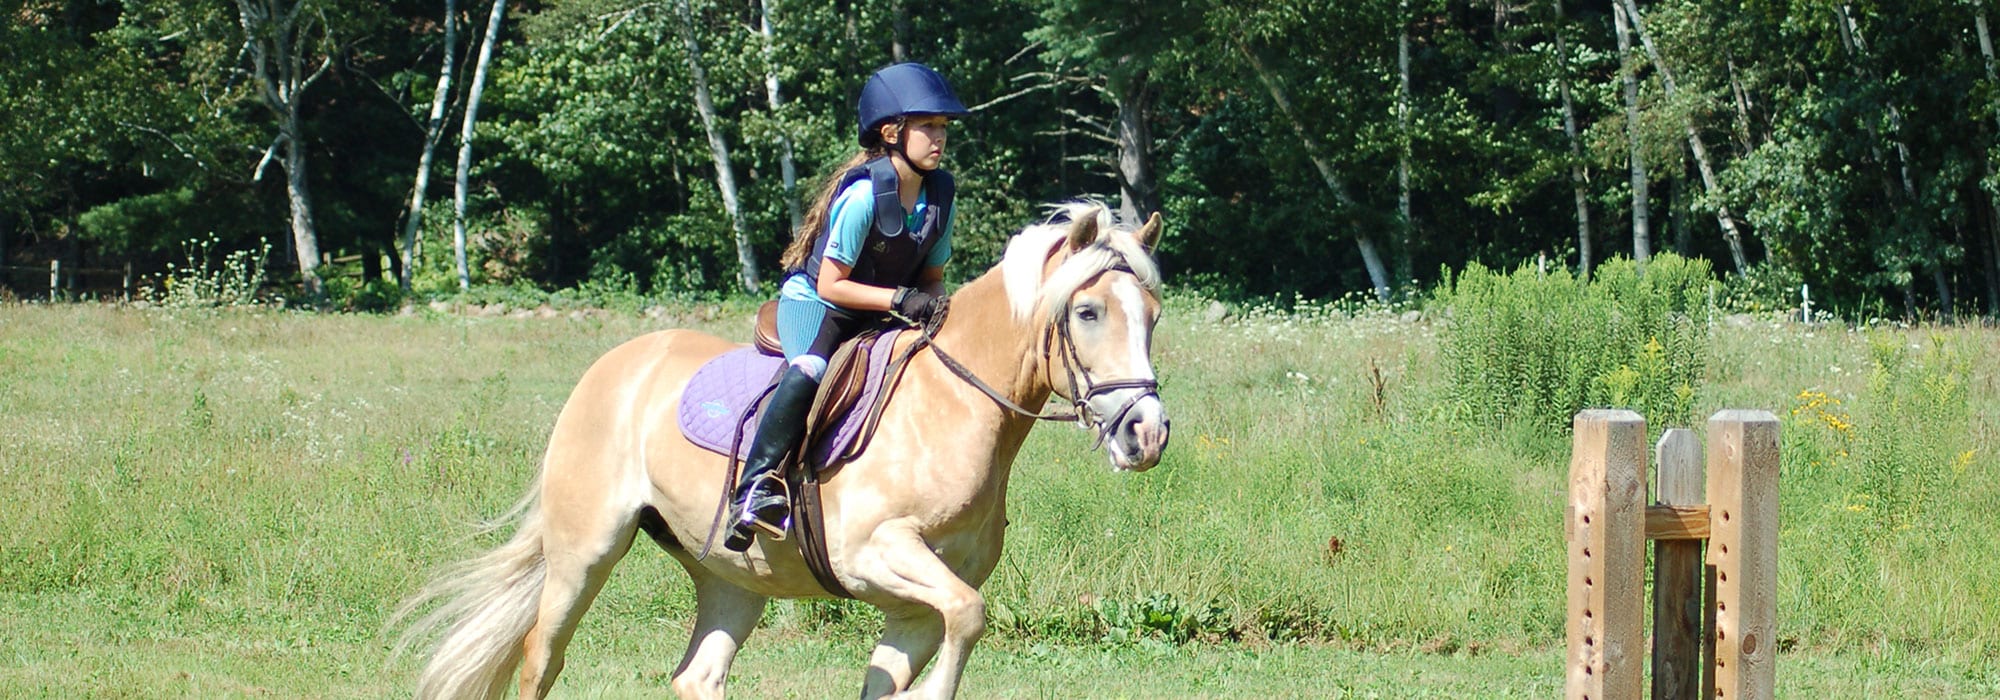 Horseback Riding at Pompositticut Farm